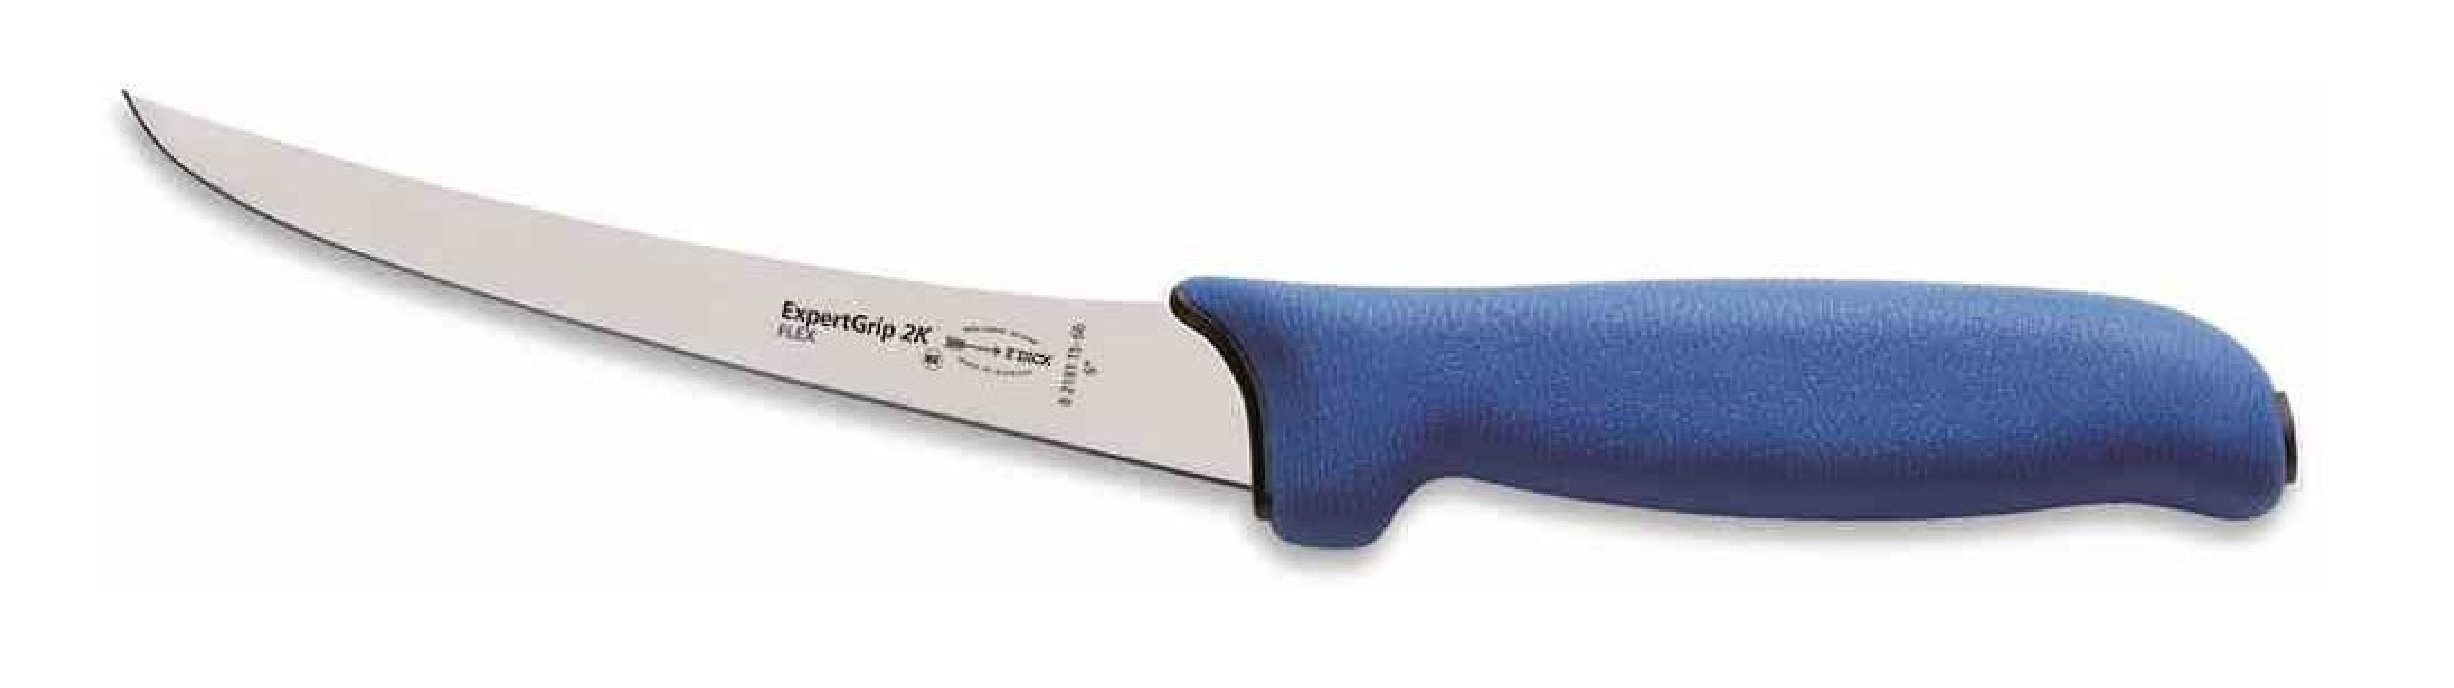 Dick Ausbeinmesser 8218113 Dick Ausbeinmesser Klinge 2K blau Grip Expert cm Messer 13